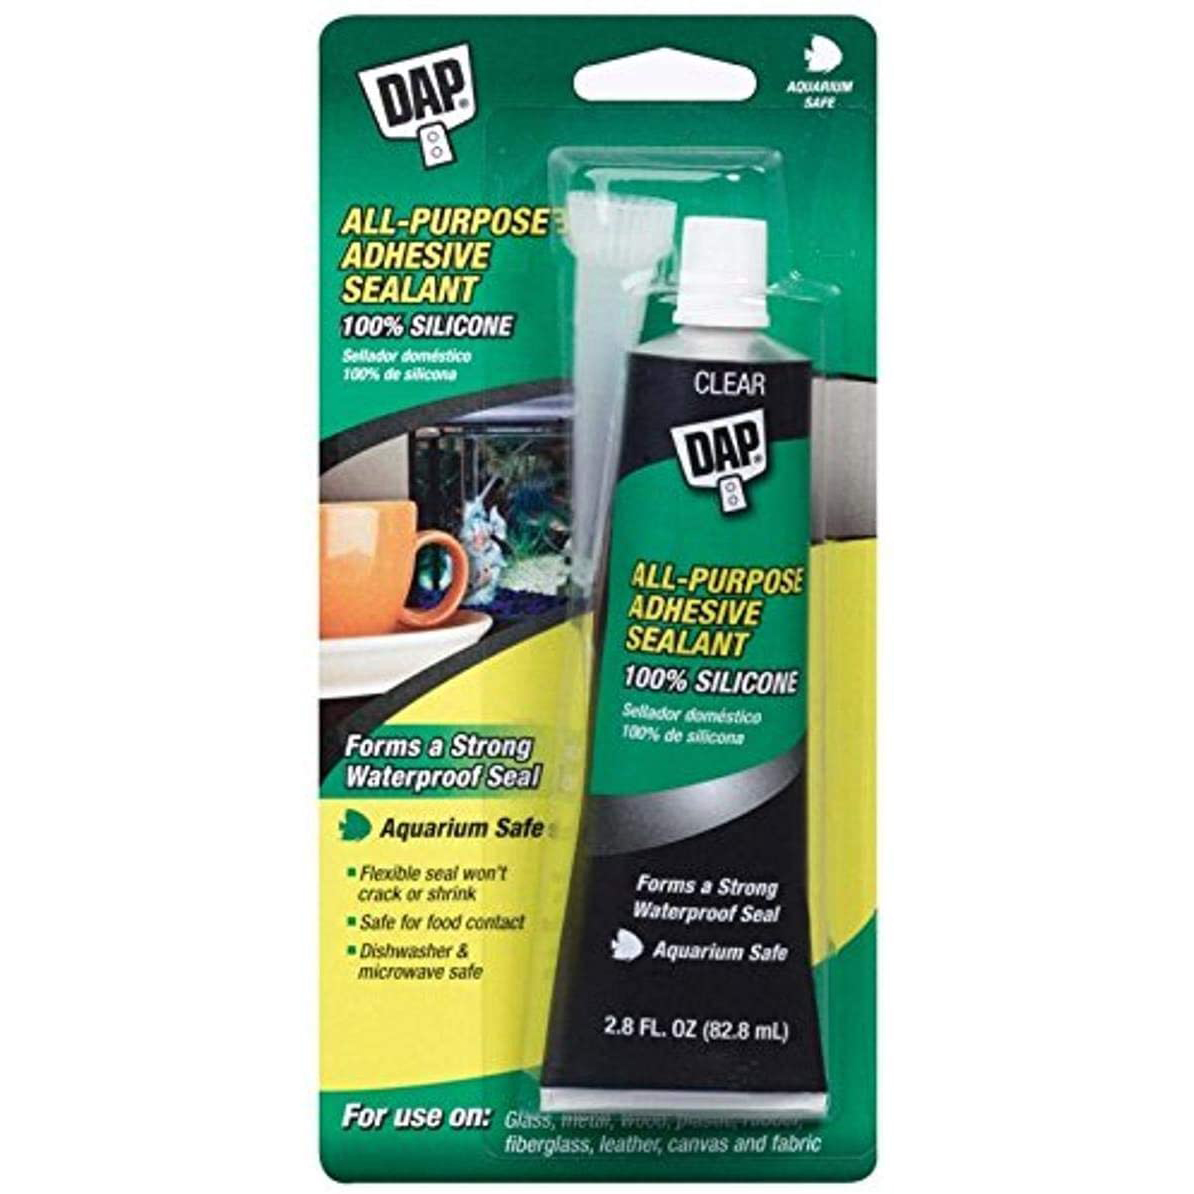 DAP AP All Purpose 100% Silicone Adhesive Sealant